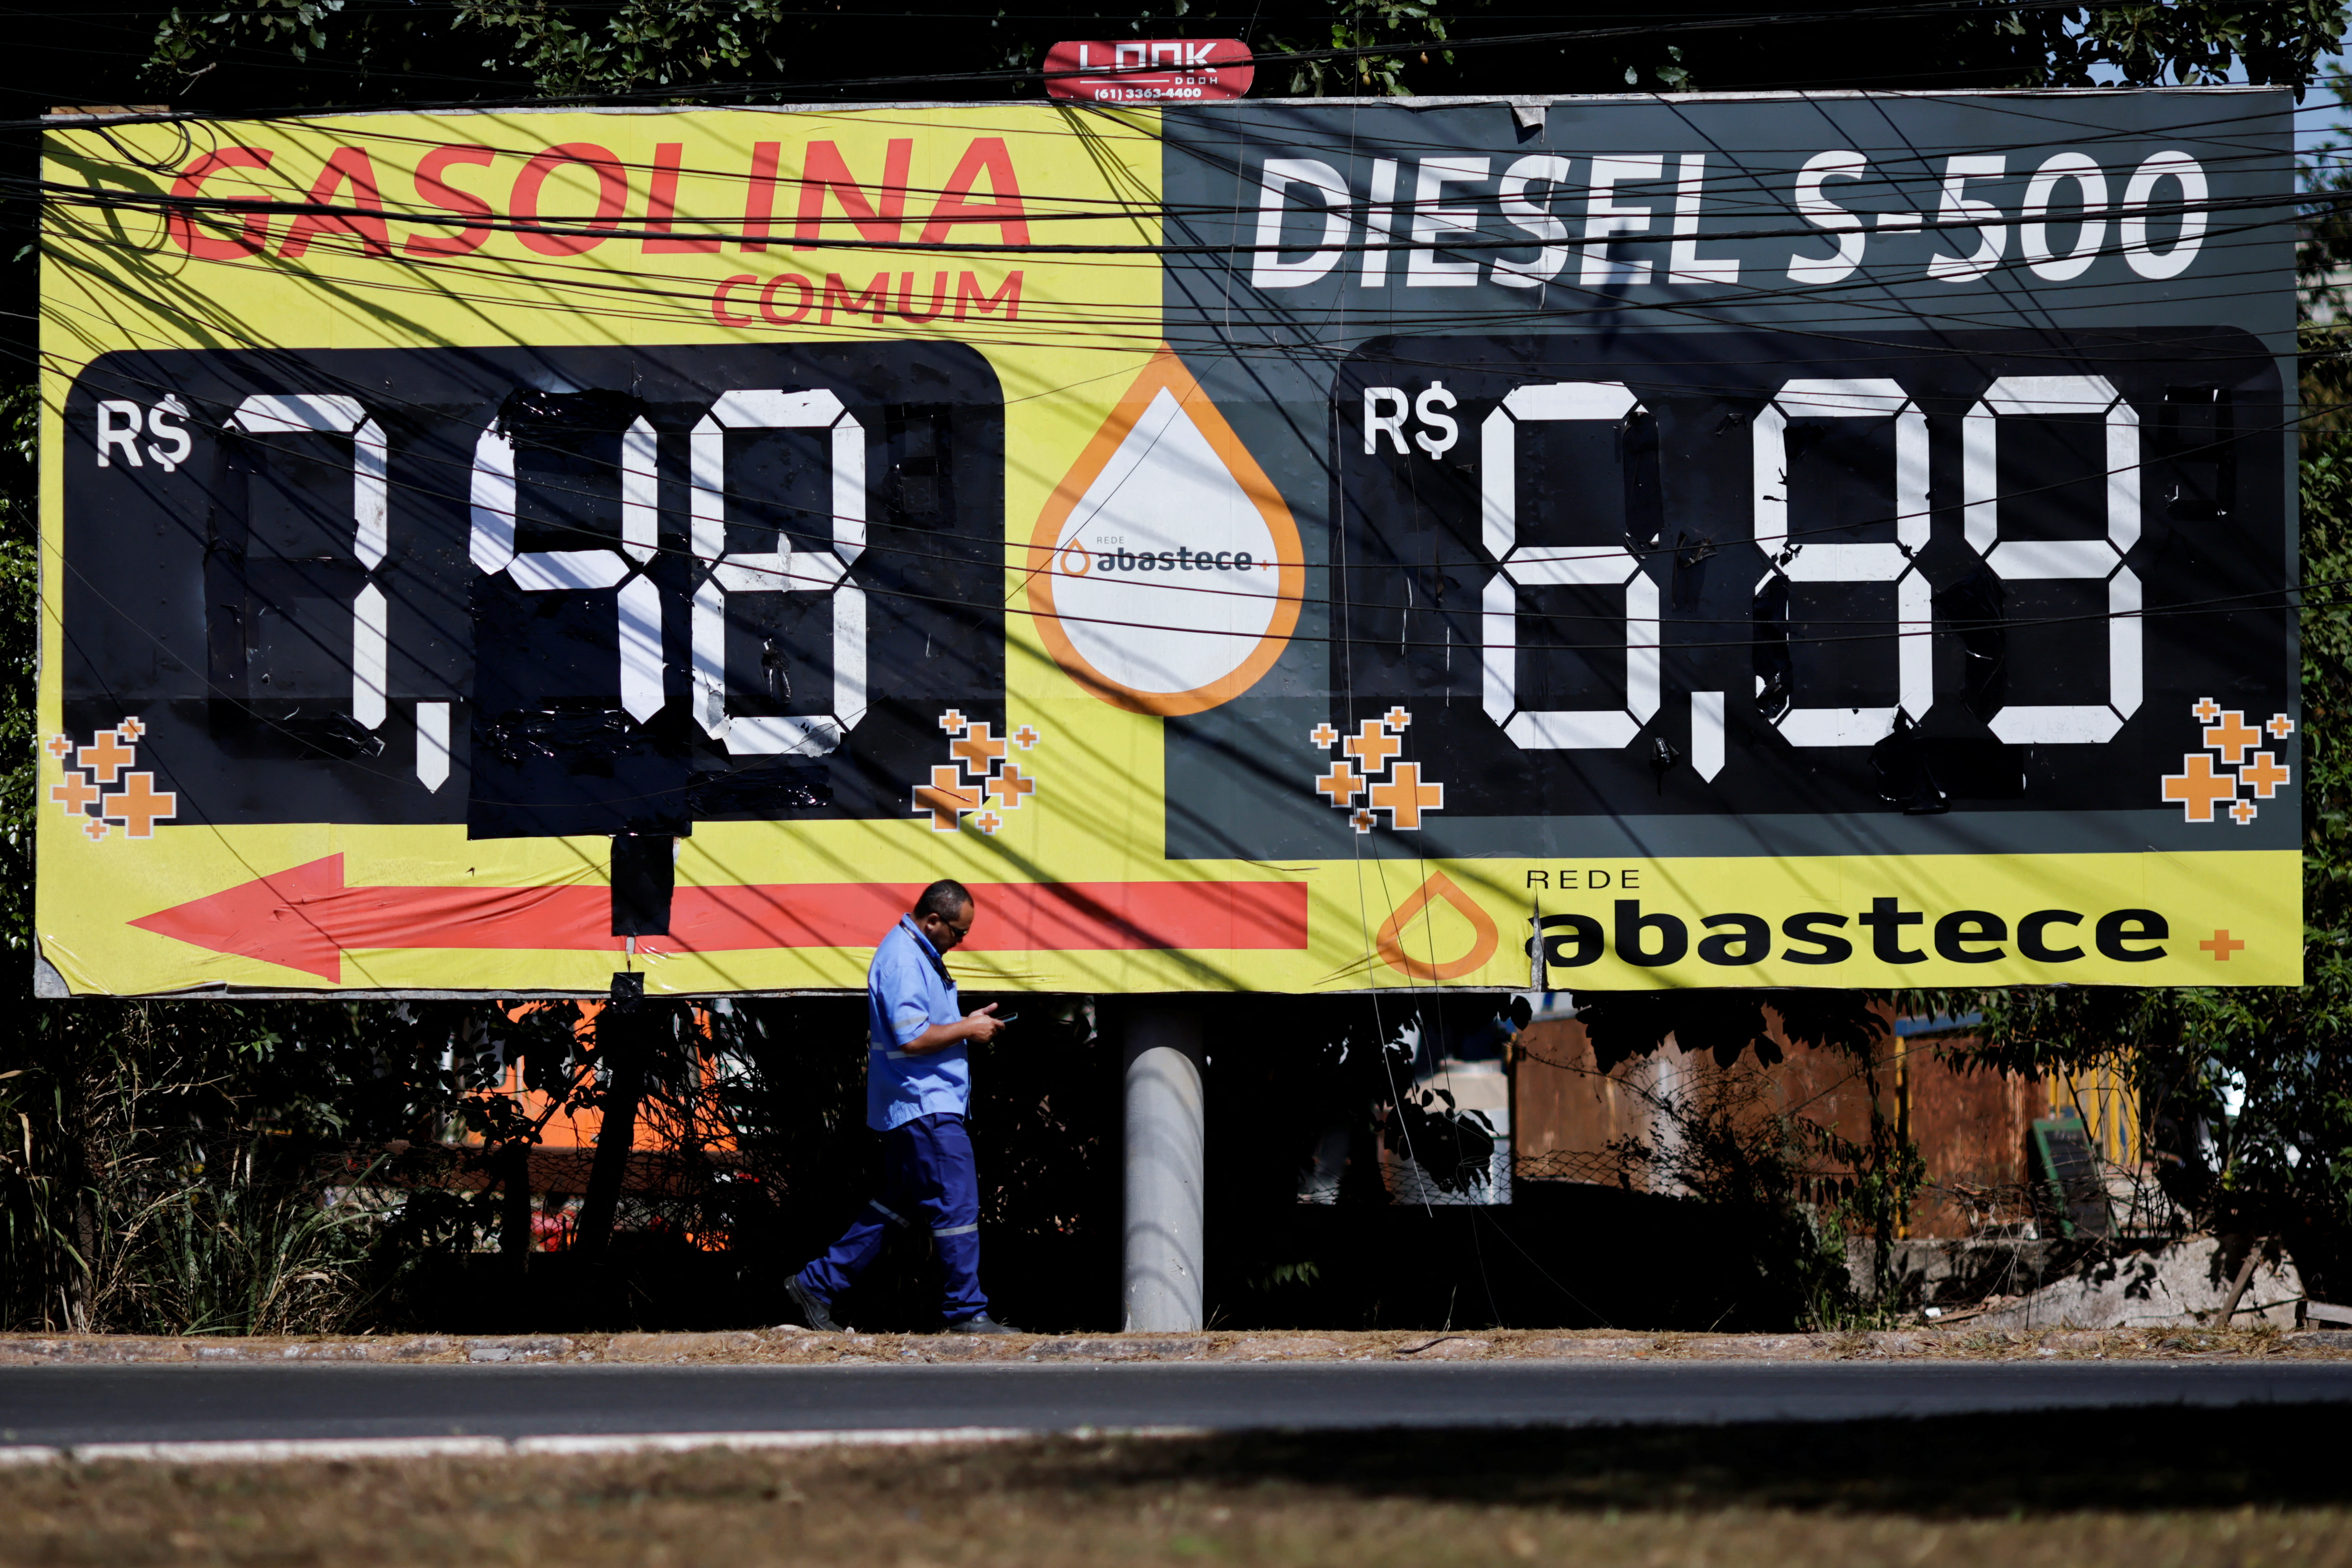 Updates fuel prices at a Brazilian oil company Petrobras in Brasilia